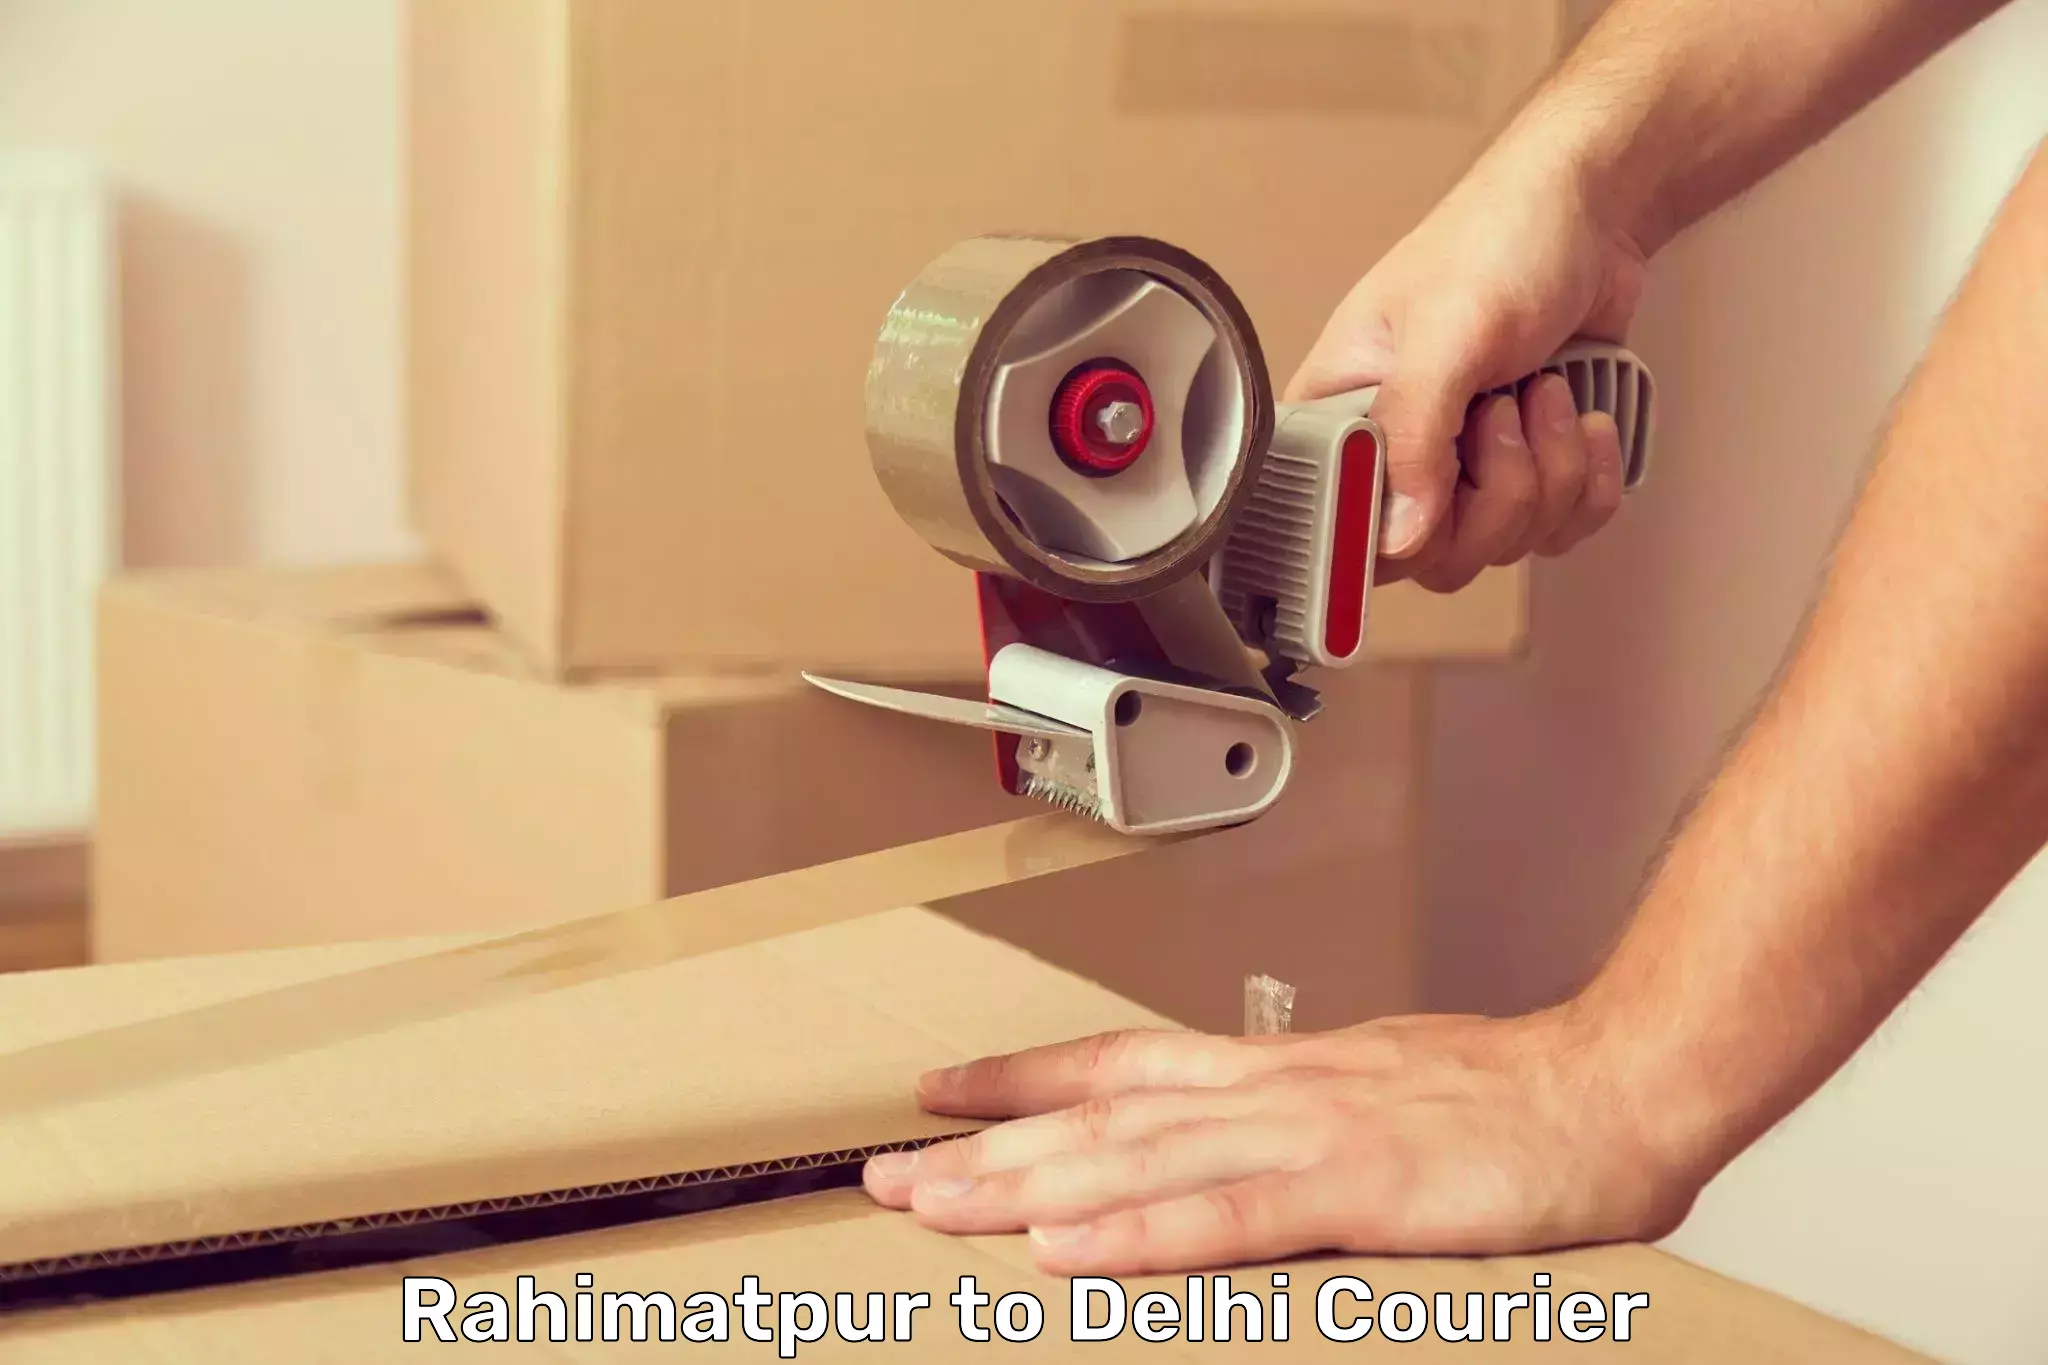 Nationwide courier service Rahimatpur to Jawaharlal Nehru University New Delhi